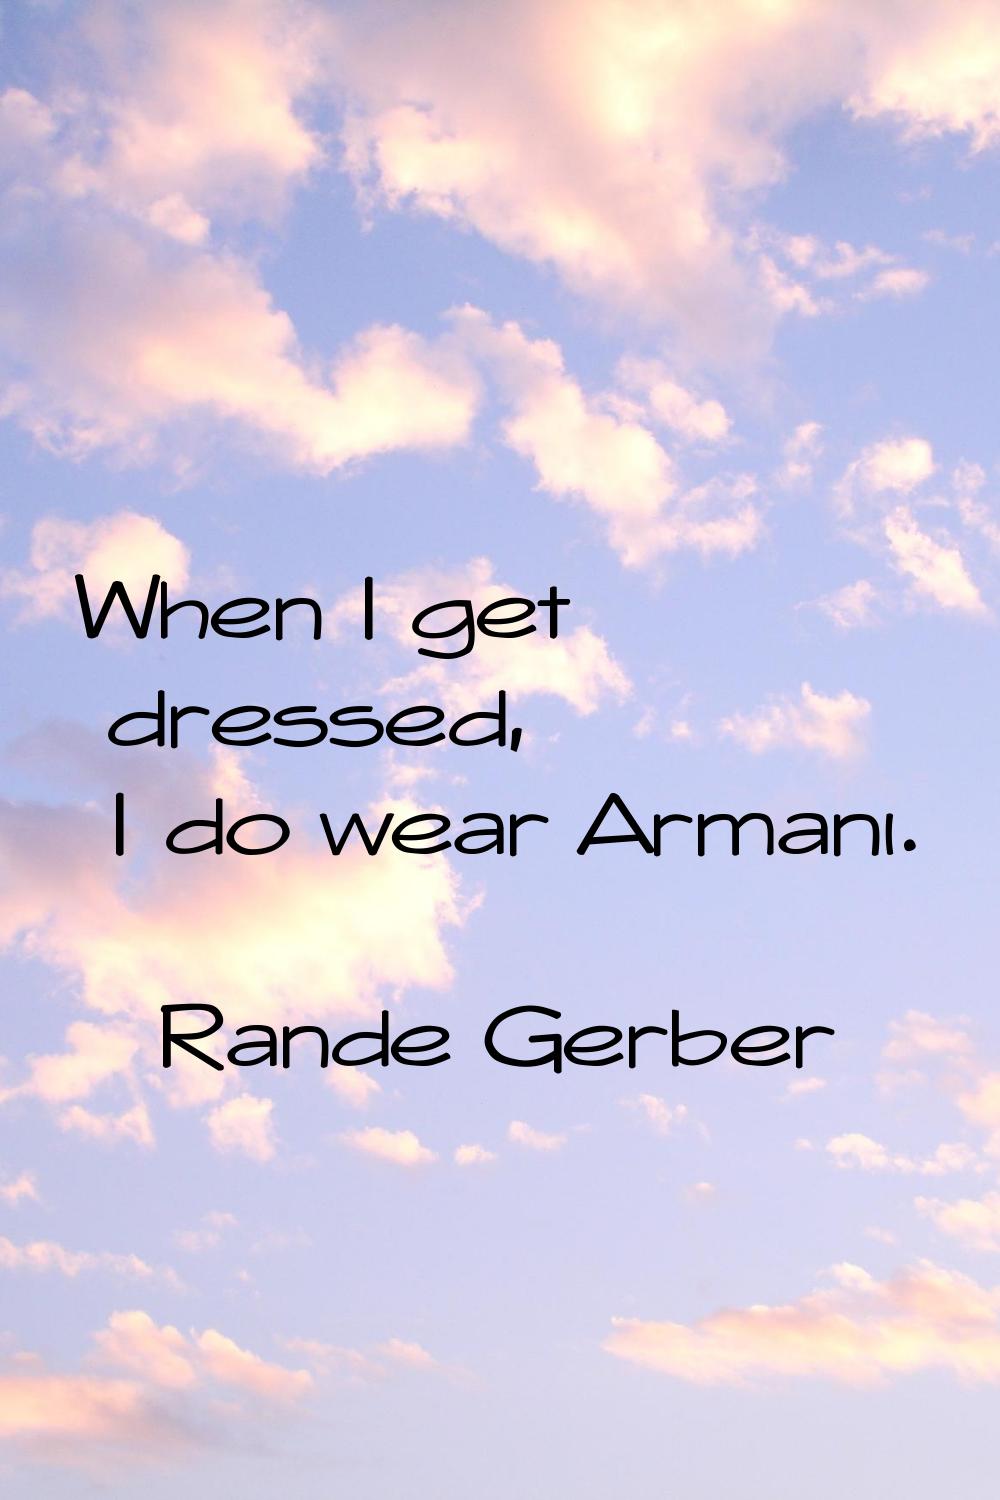 When I get dressed, I do wear Armani.